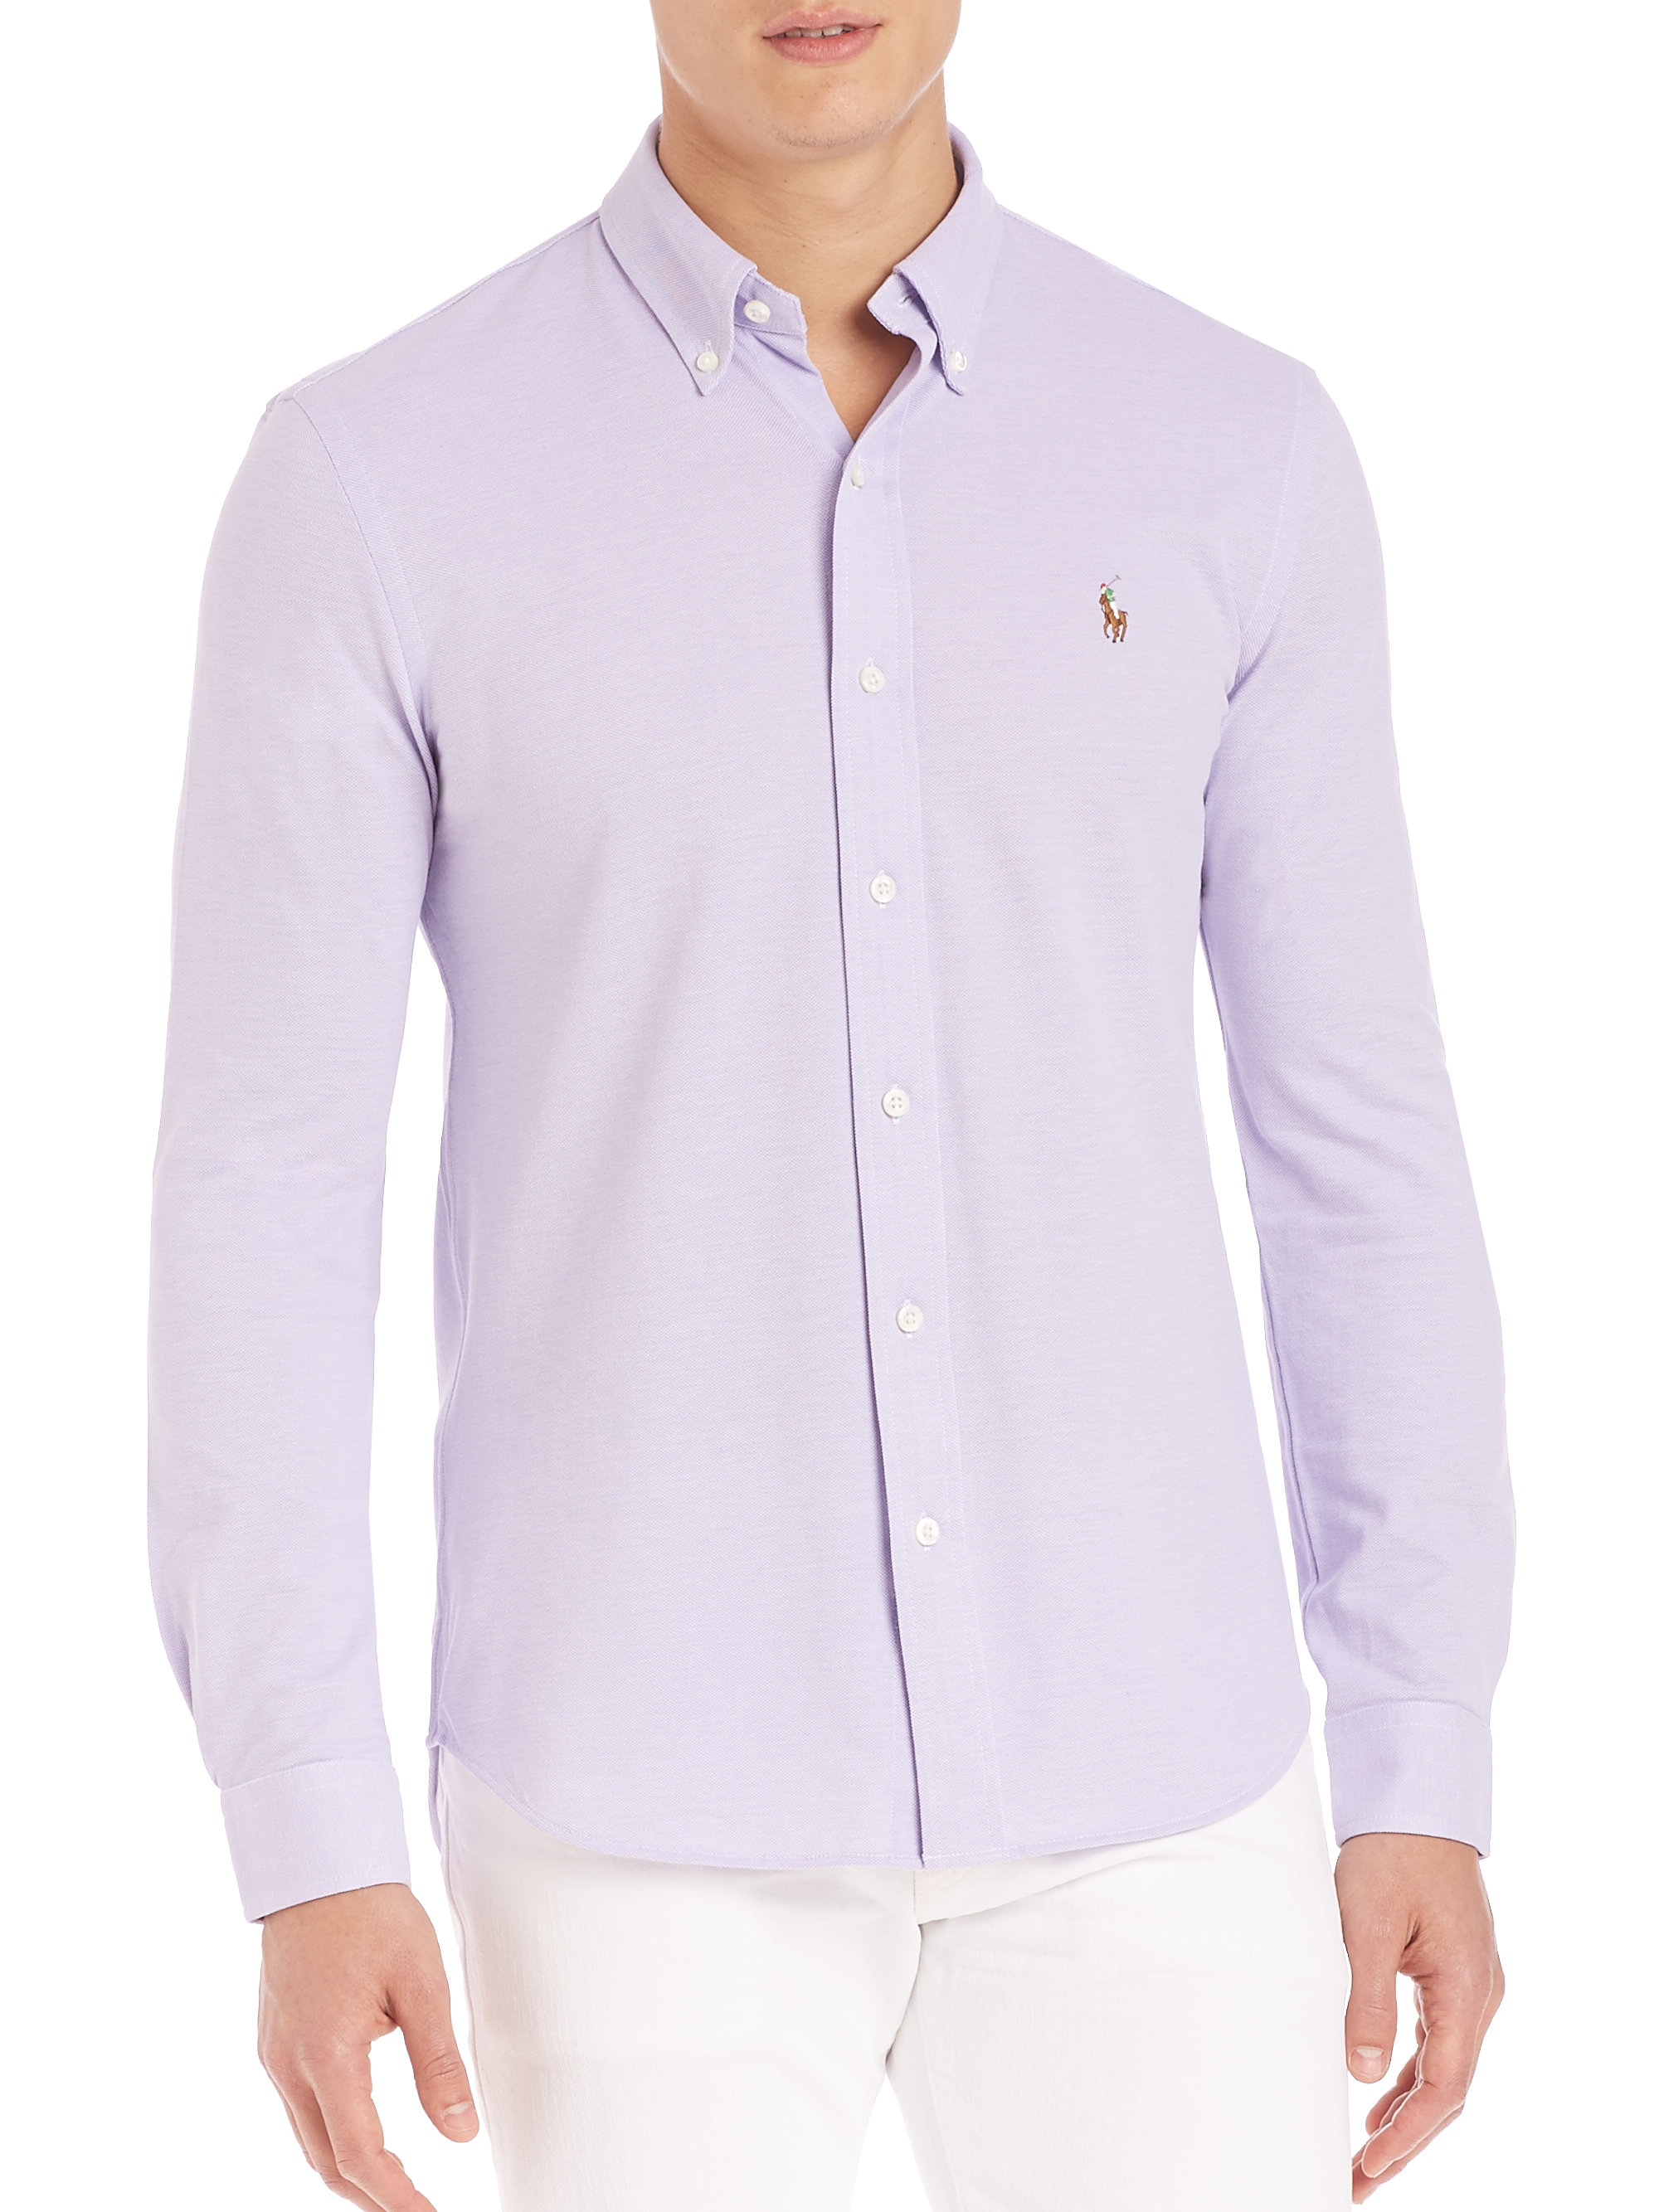 Polo Ralph Lauren Cotton Knit Oxford Shirt in Powder Purple (Purple) for  Men - Lyst